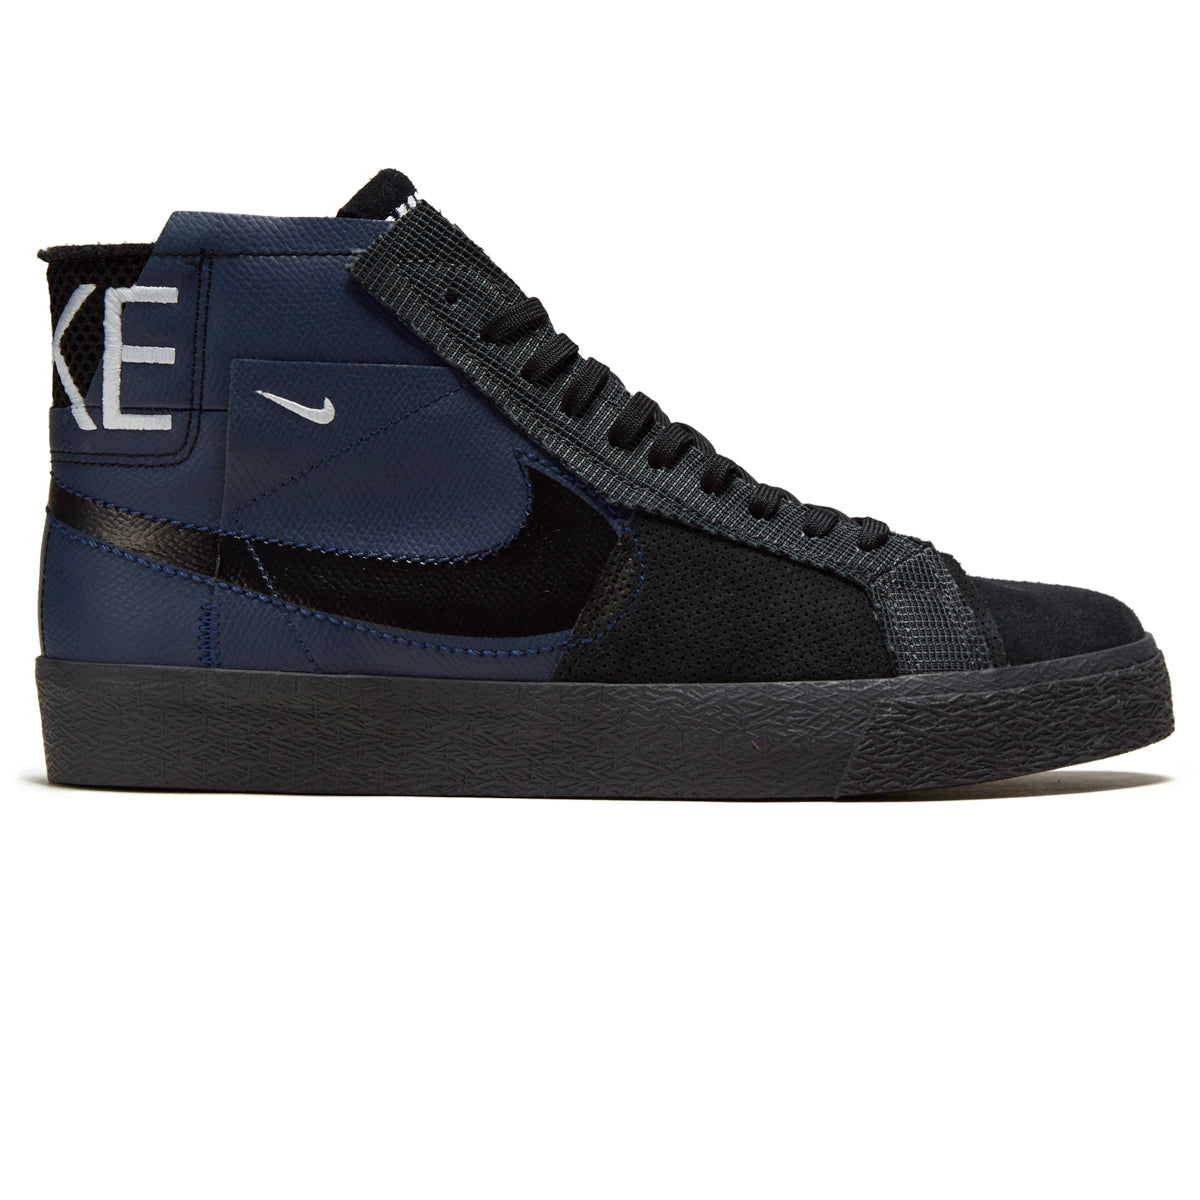 Nike SB Zoom Blazer Mid Prm Shoes - Midnight Navy/Black/Football Grey image 1